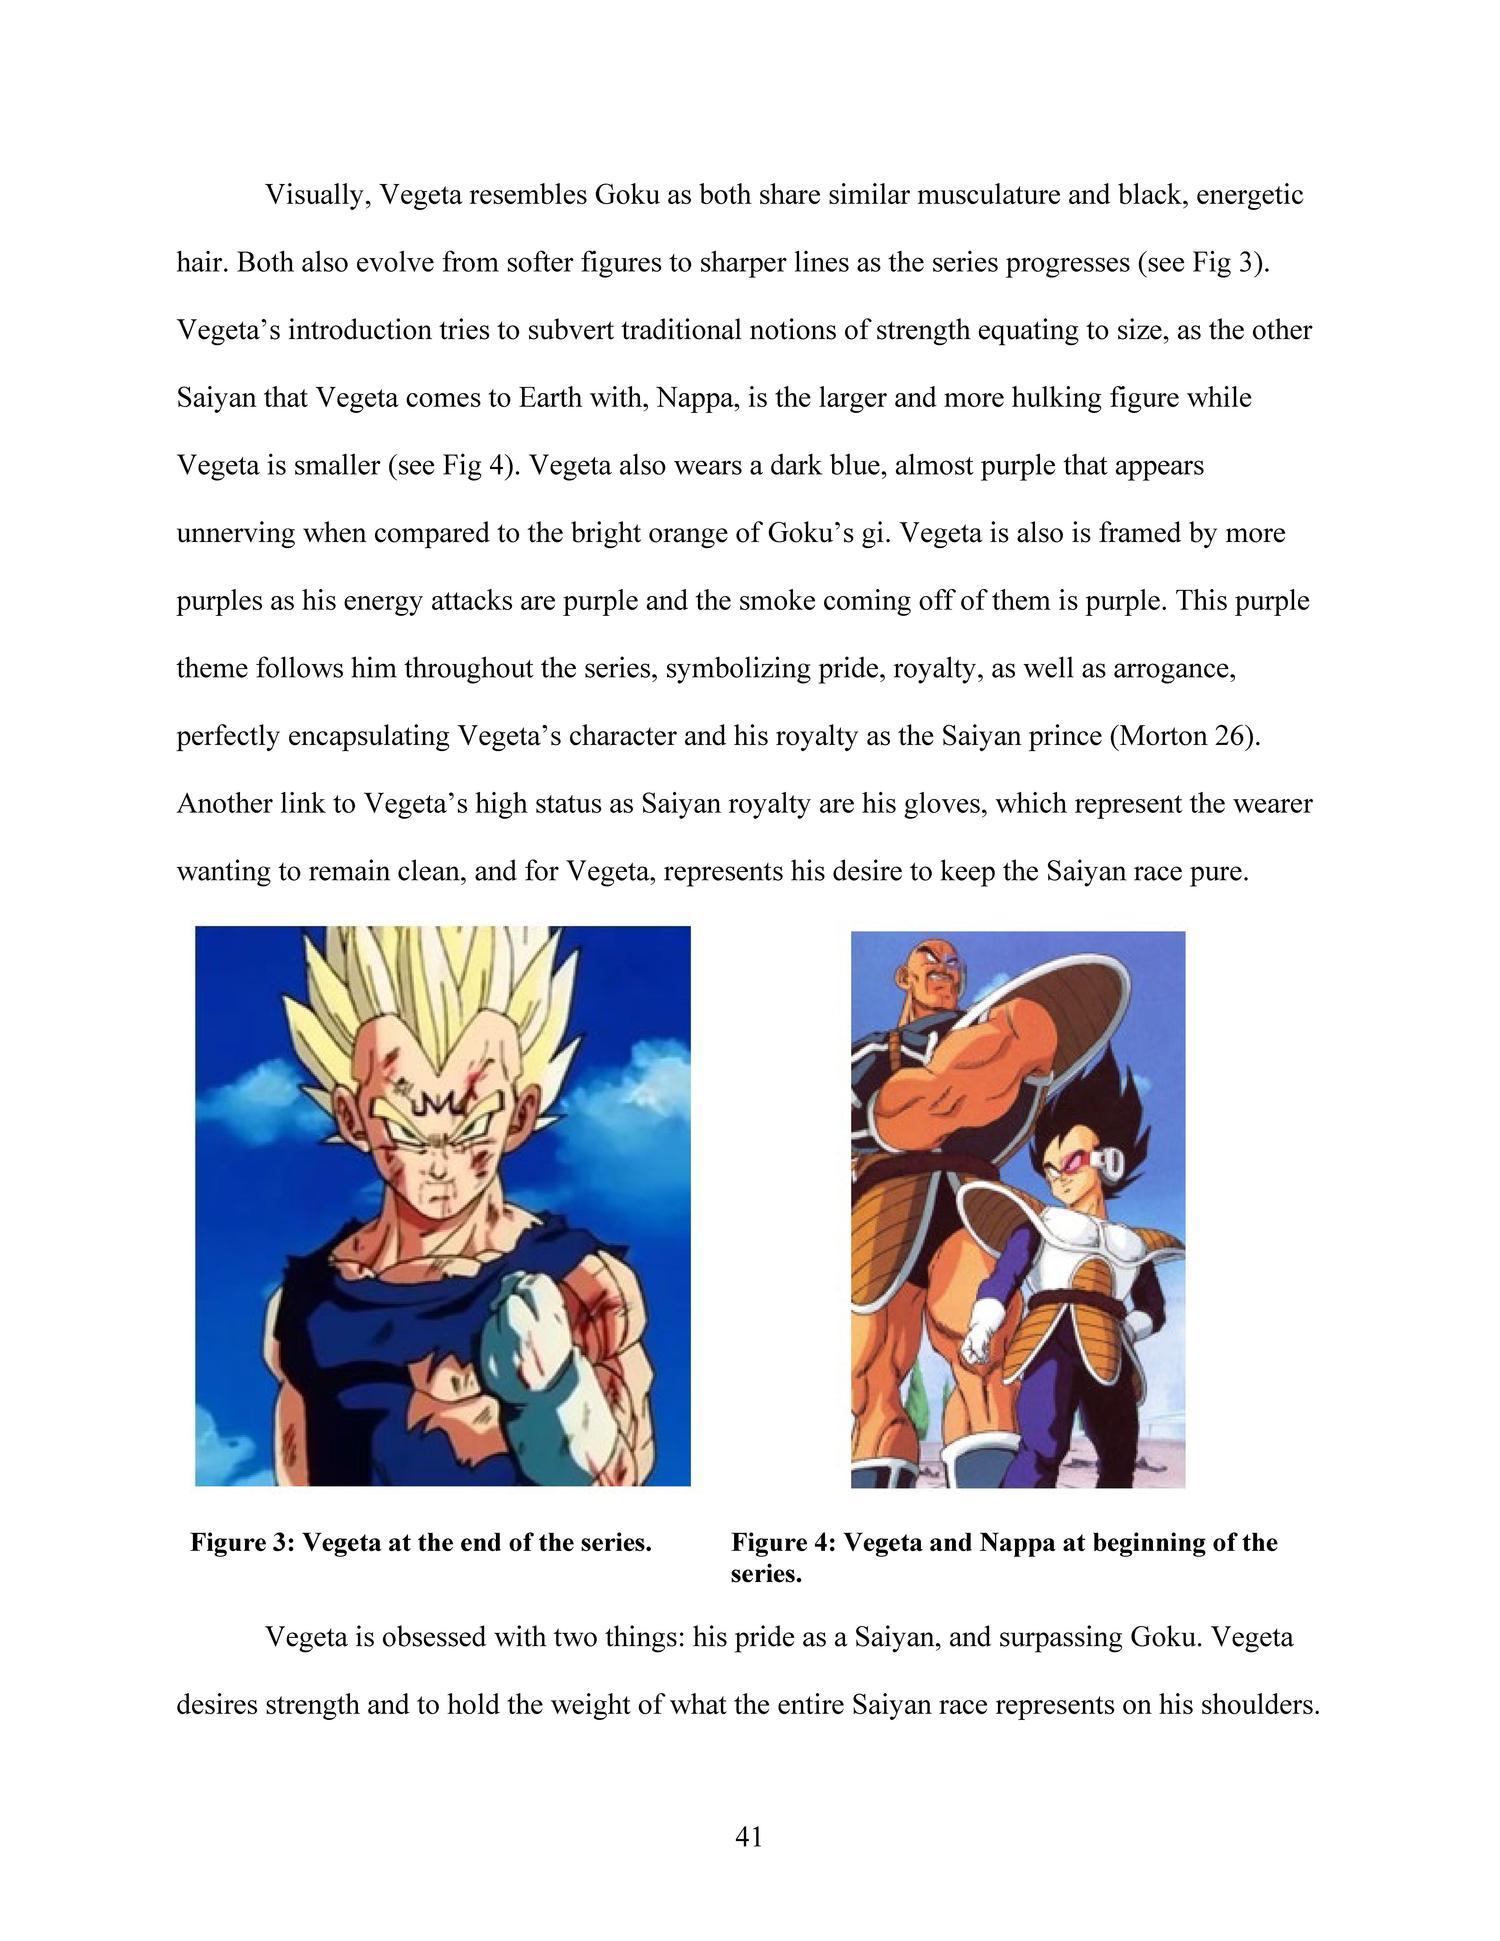 21 'Dragon Ball Z' Trivia Questions To Help You Go Super Saiyan